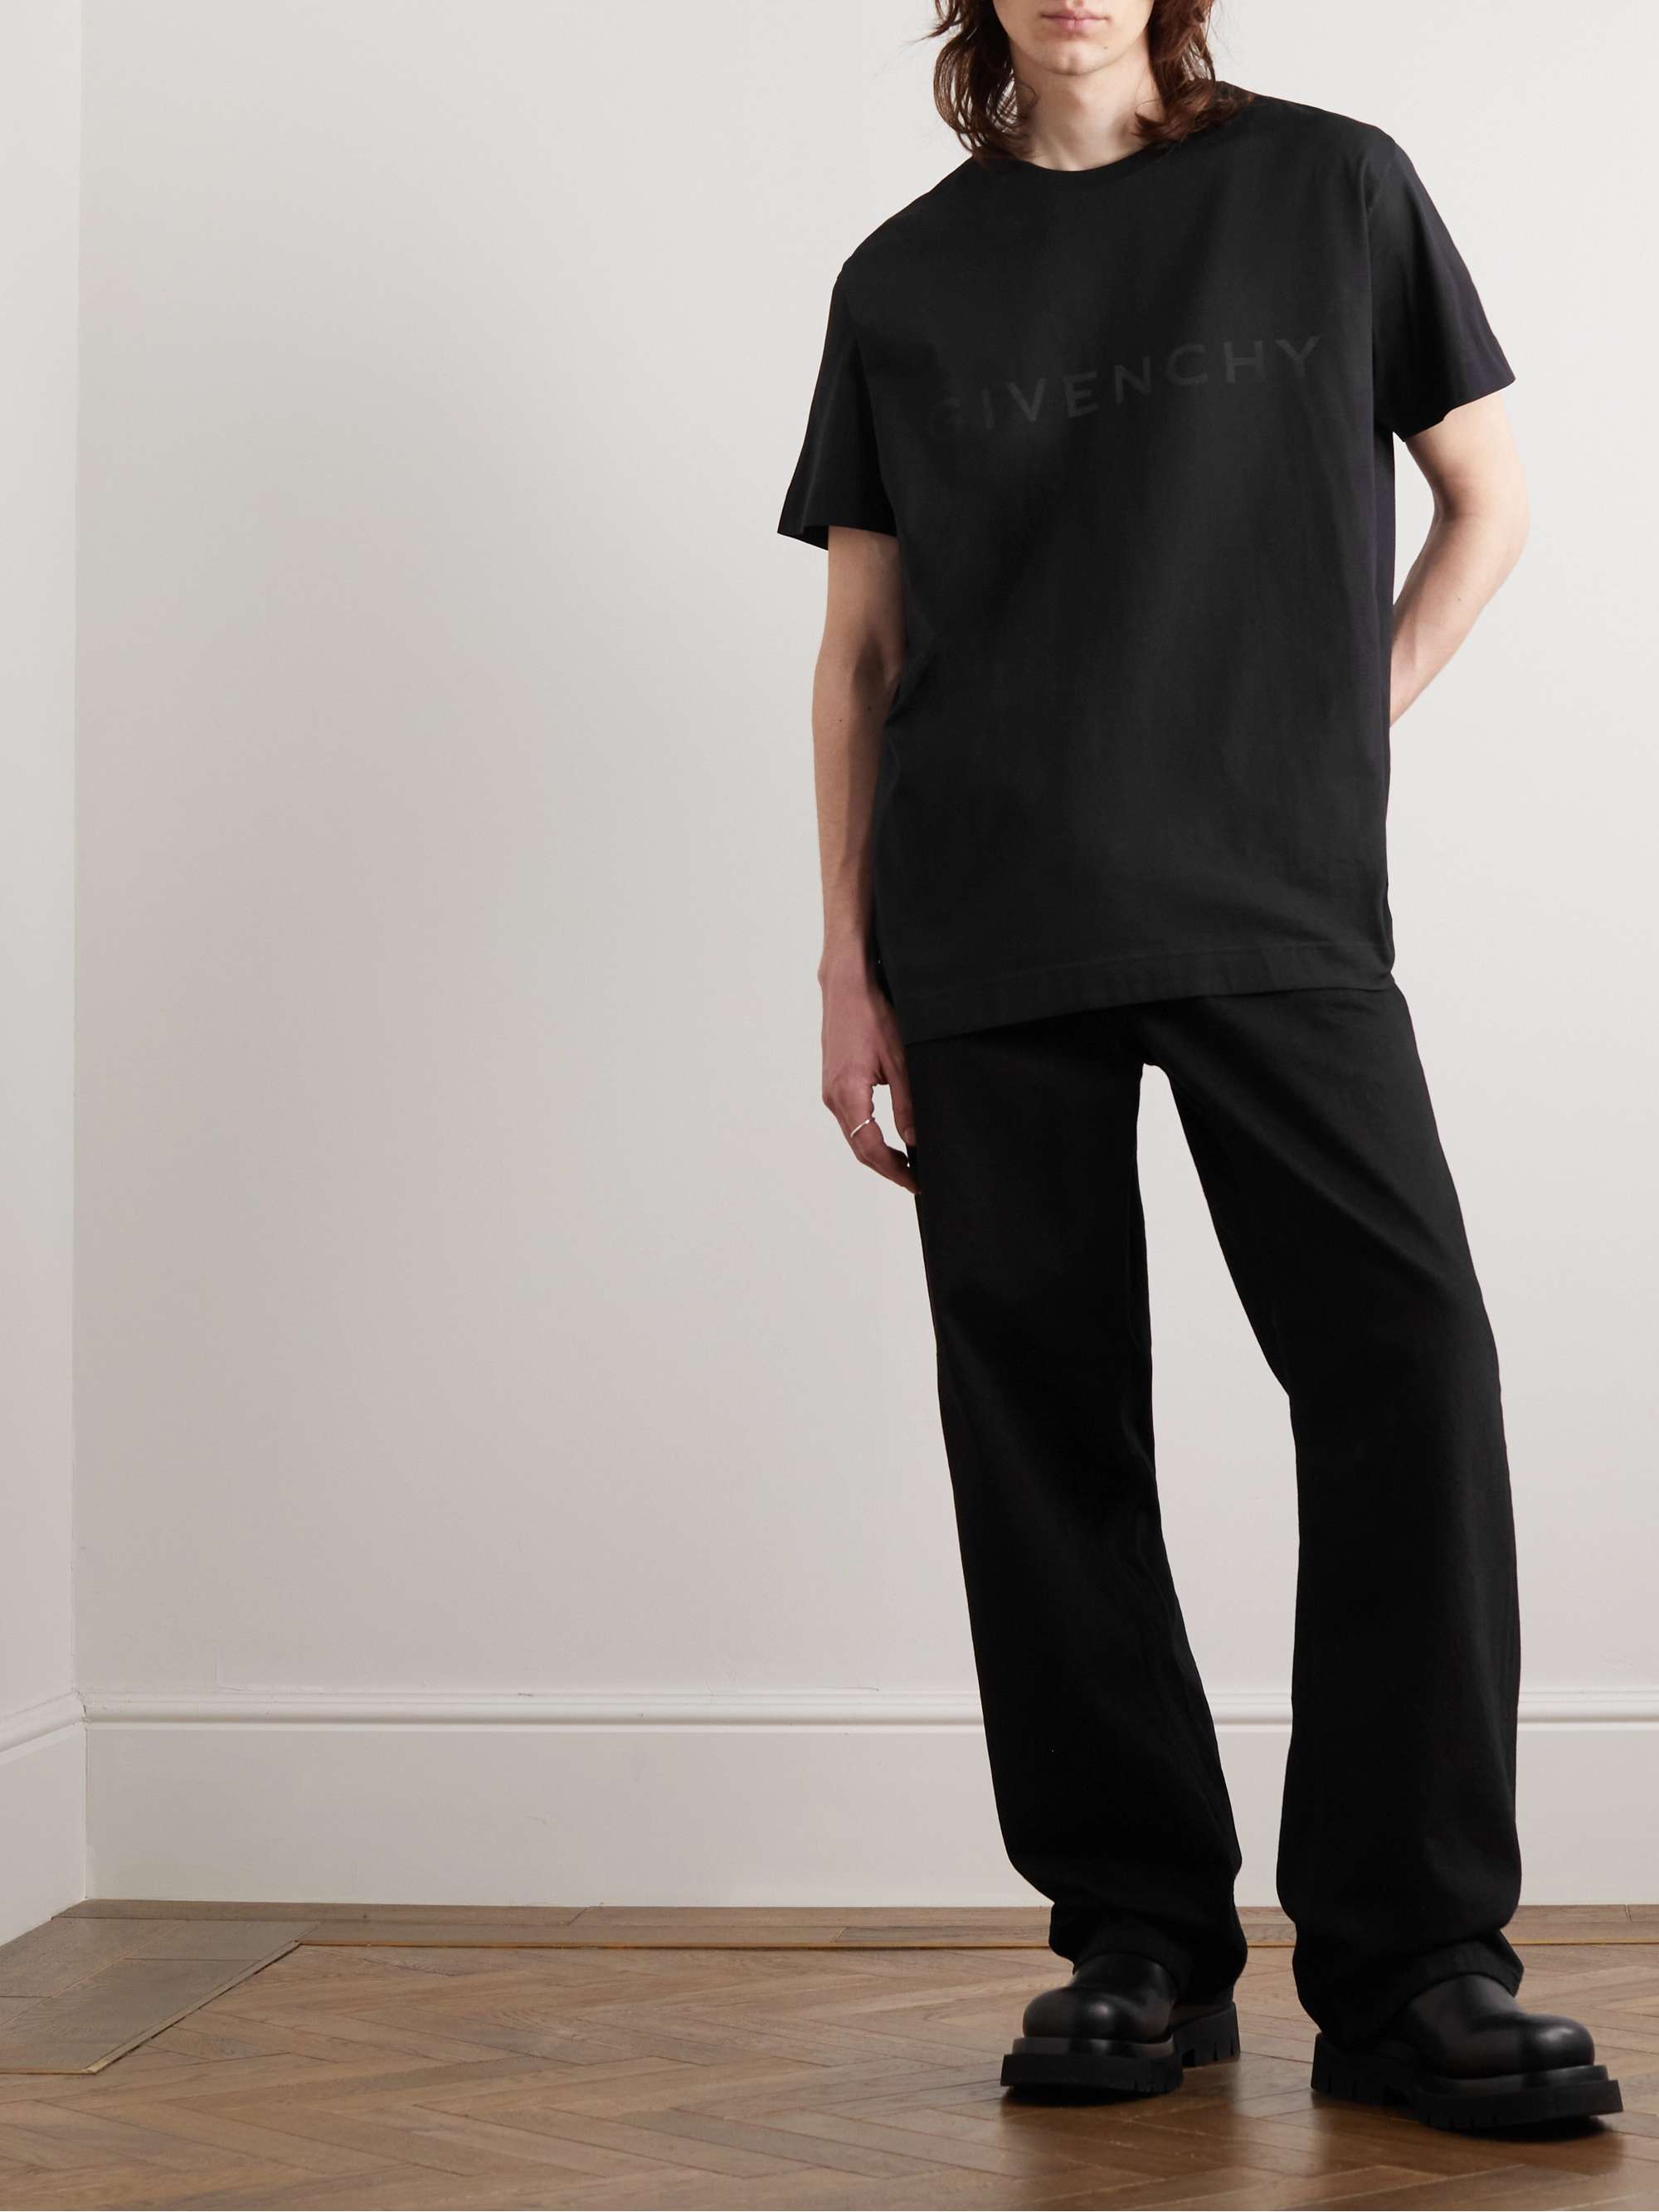 GIVENCHY Logo-Print Cotton-Jersey T-Shirt for Men | MR PORTER